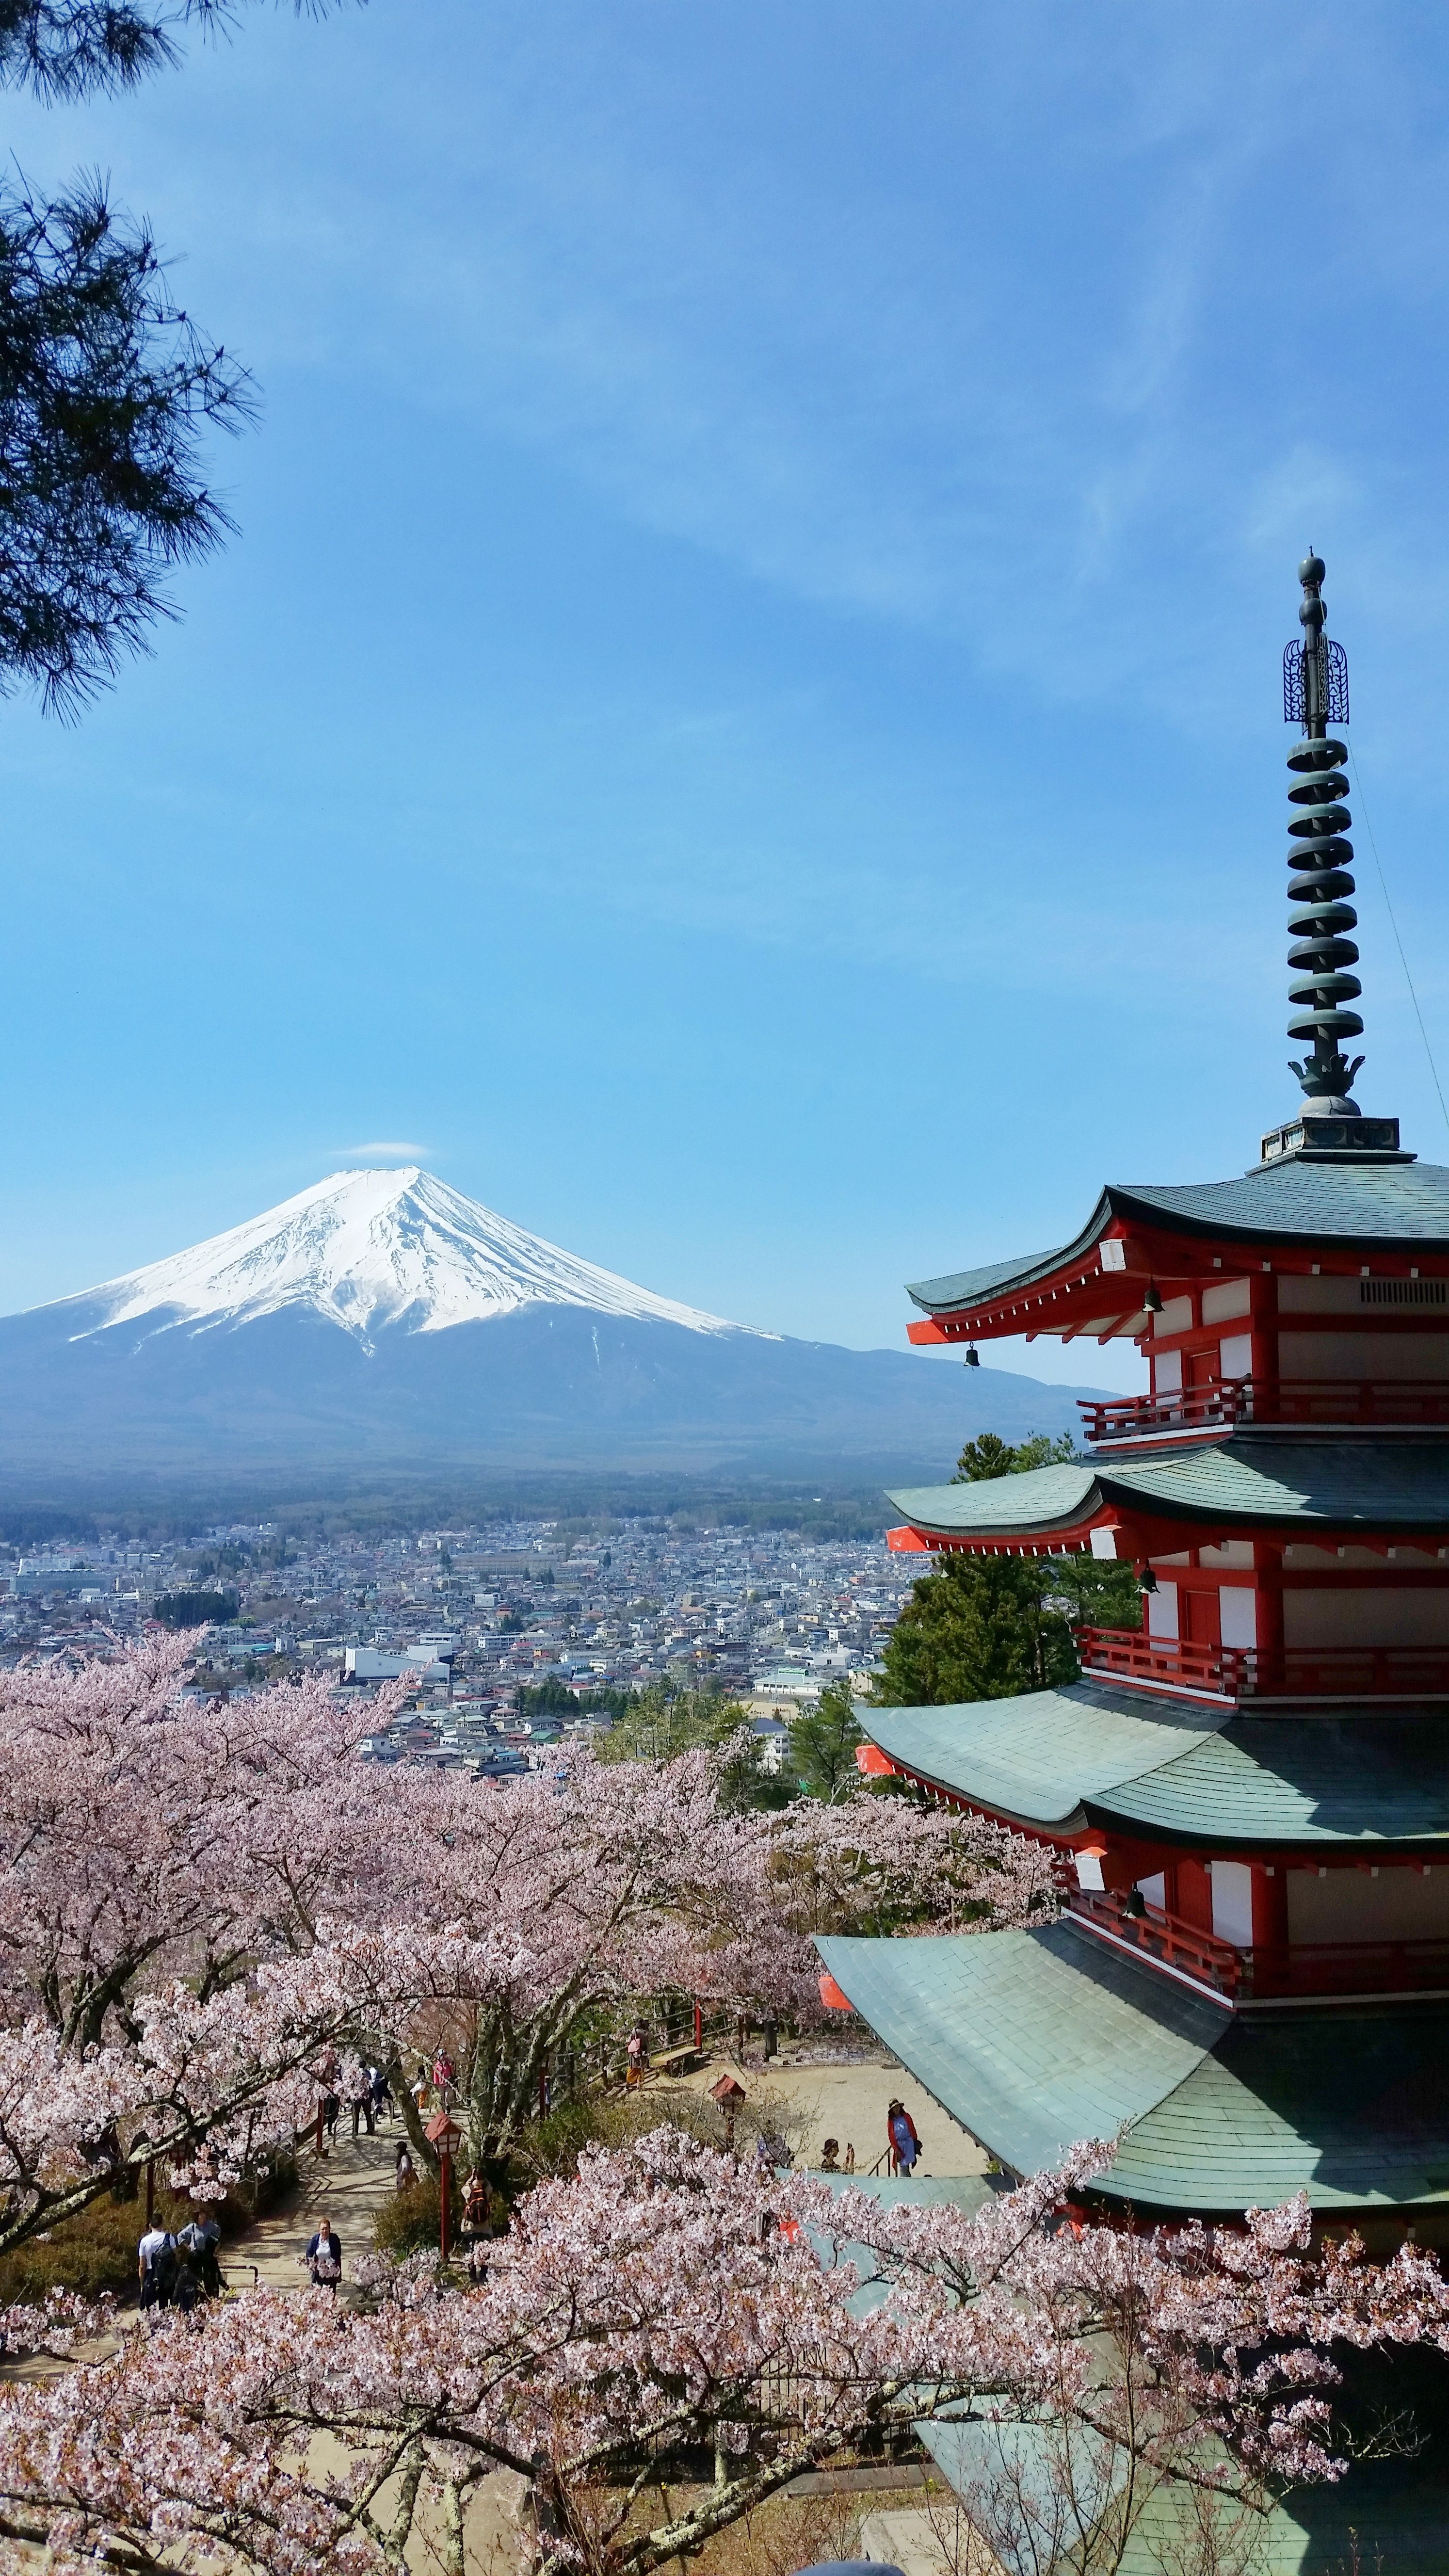 Tokyo to Chureito Pagoda train to see Mt Fuji